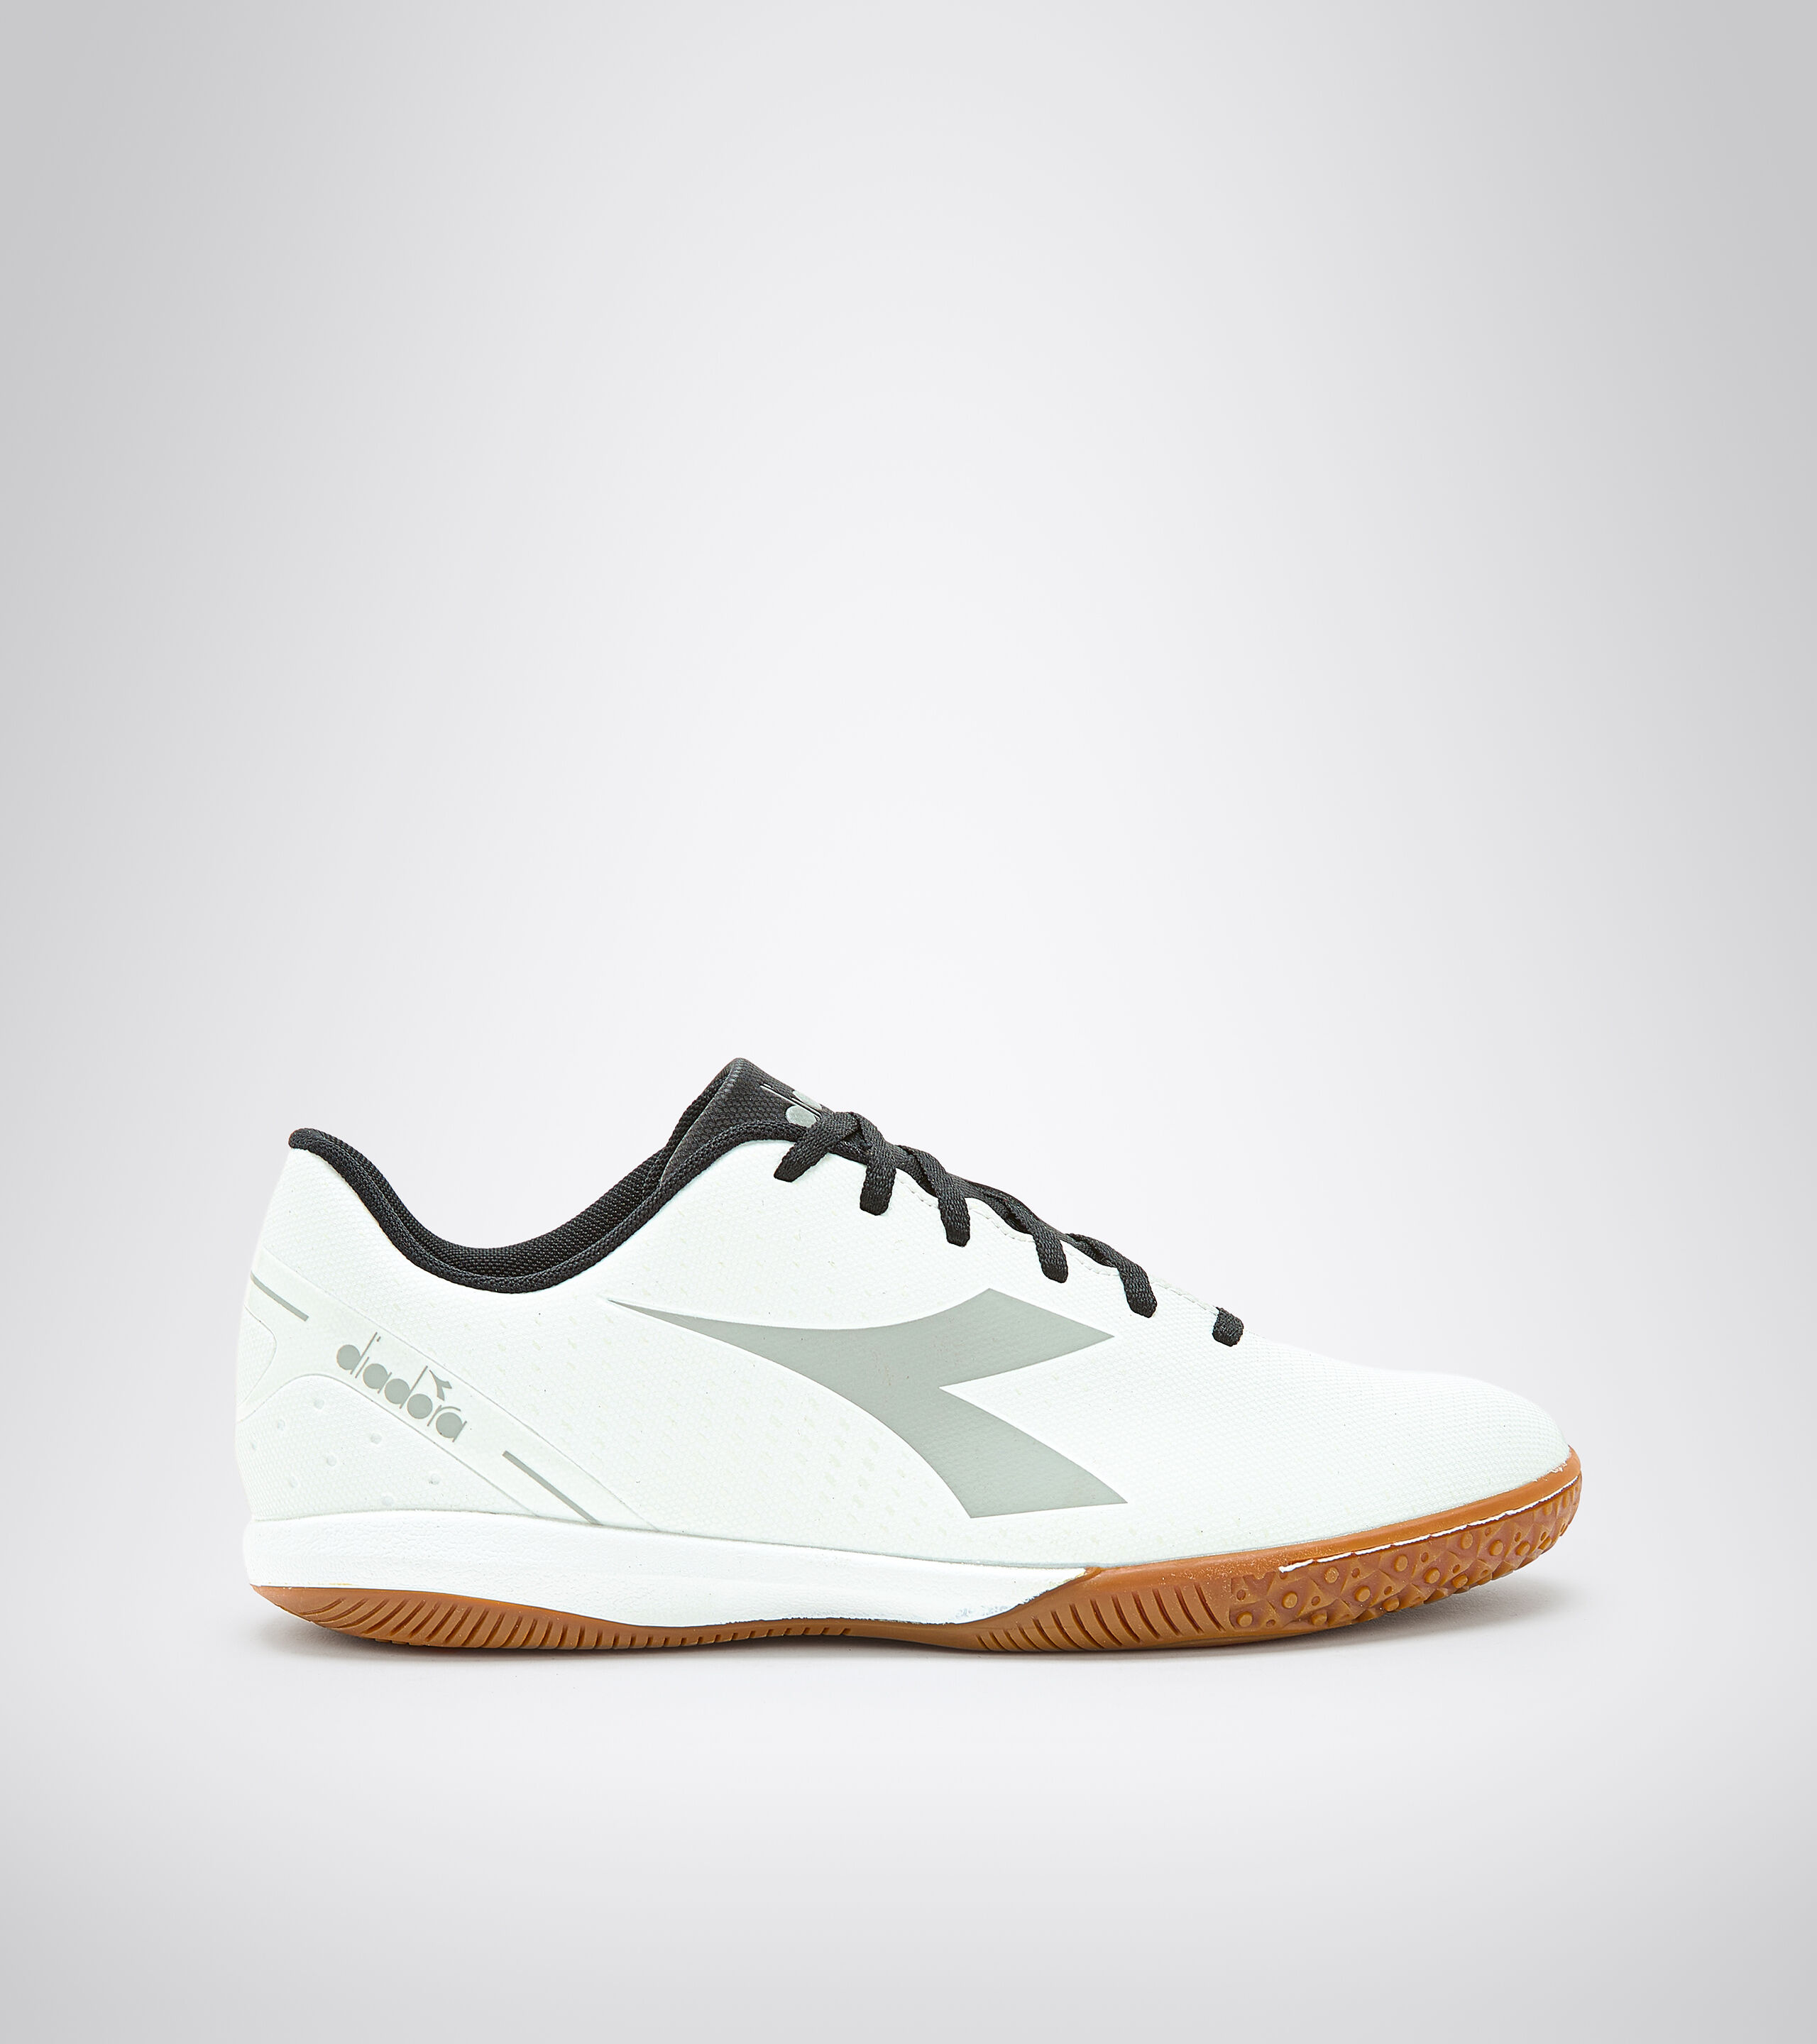 Diadora Italica R ID Indoor Soccer Shoe C3444 Men's Size 6 